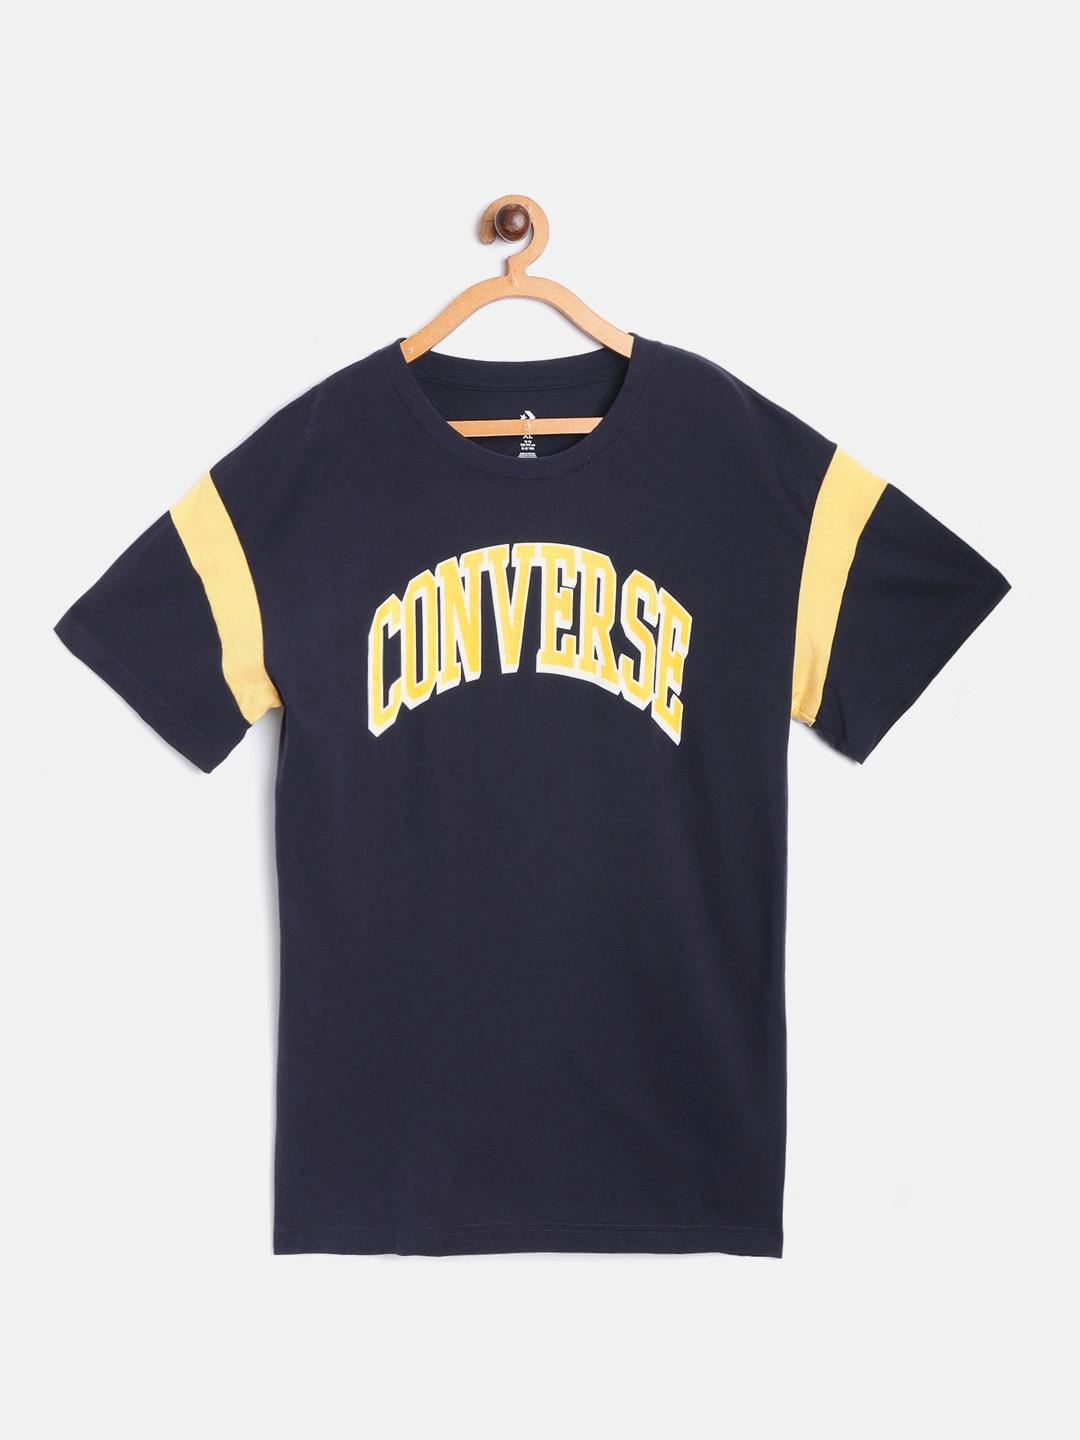 converse-boys-navy-blue-&-yellow-pure-cotton-brand-logo-print-round-neck-t-shirt